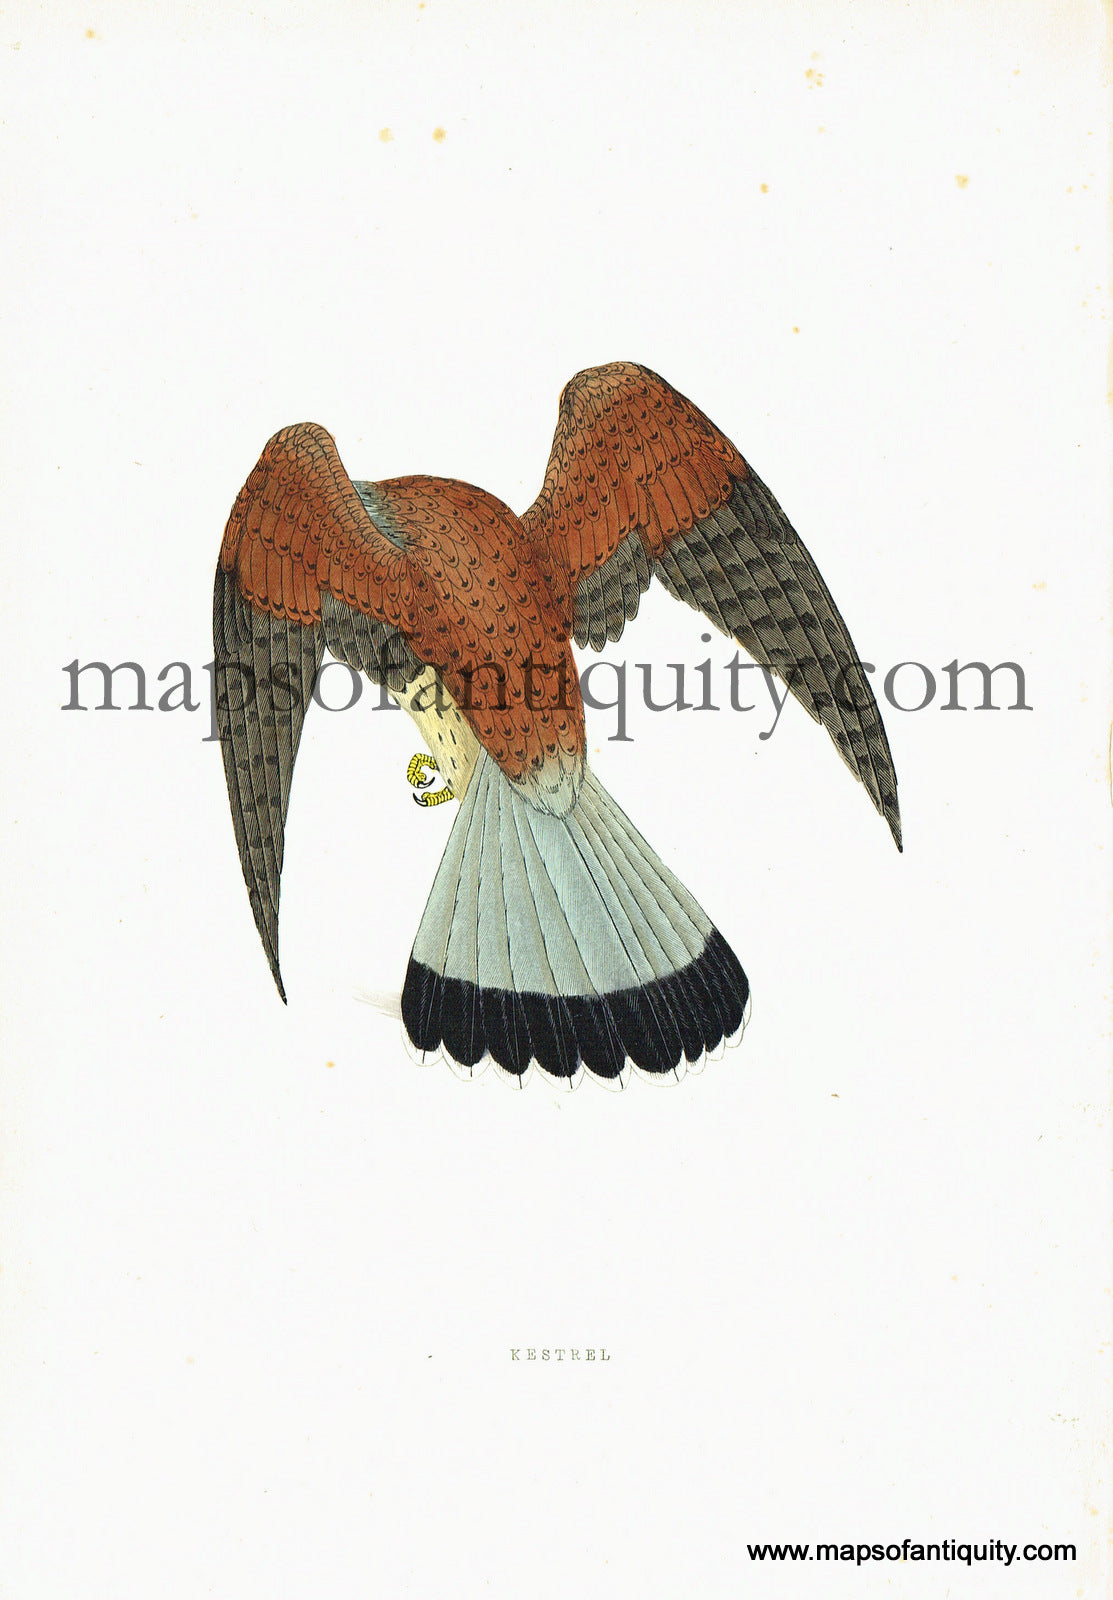 Antique-Hand-Colored-Engraved-Illustration-Kestrel-Antique-Prints-Natural-History-Birds-c.-1860-Morris-Maps-Of-Antiquity